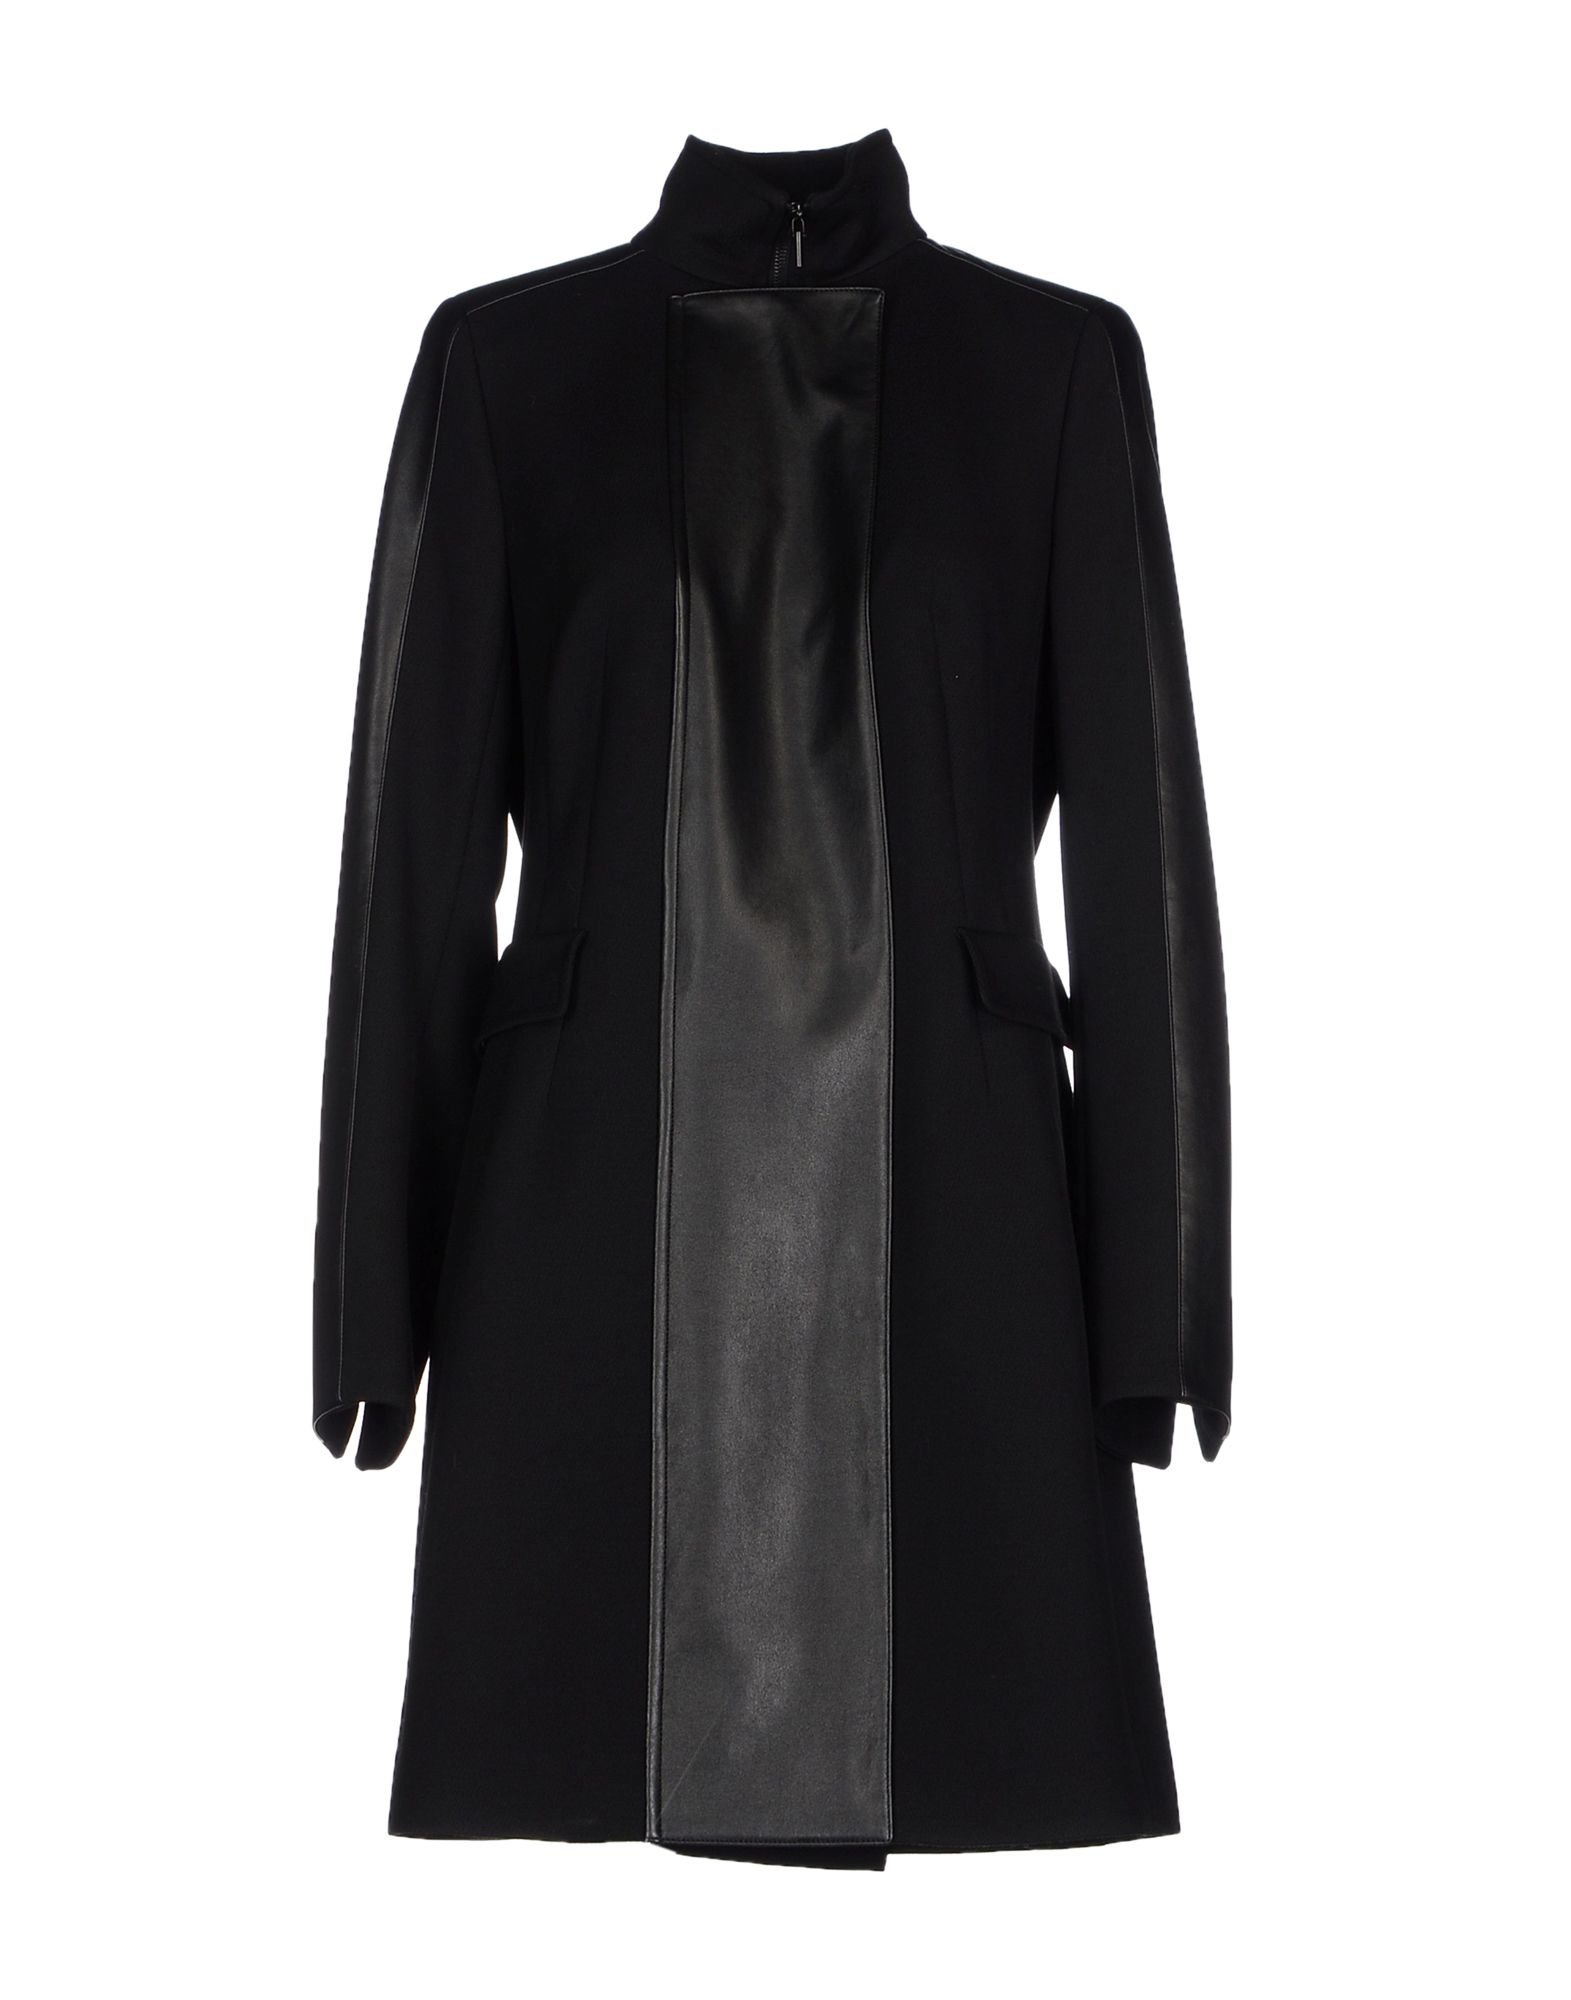 Lyst - Akris Punto Coat in Black